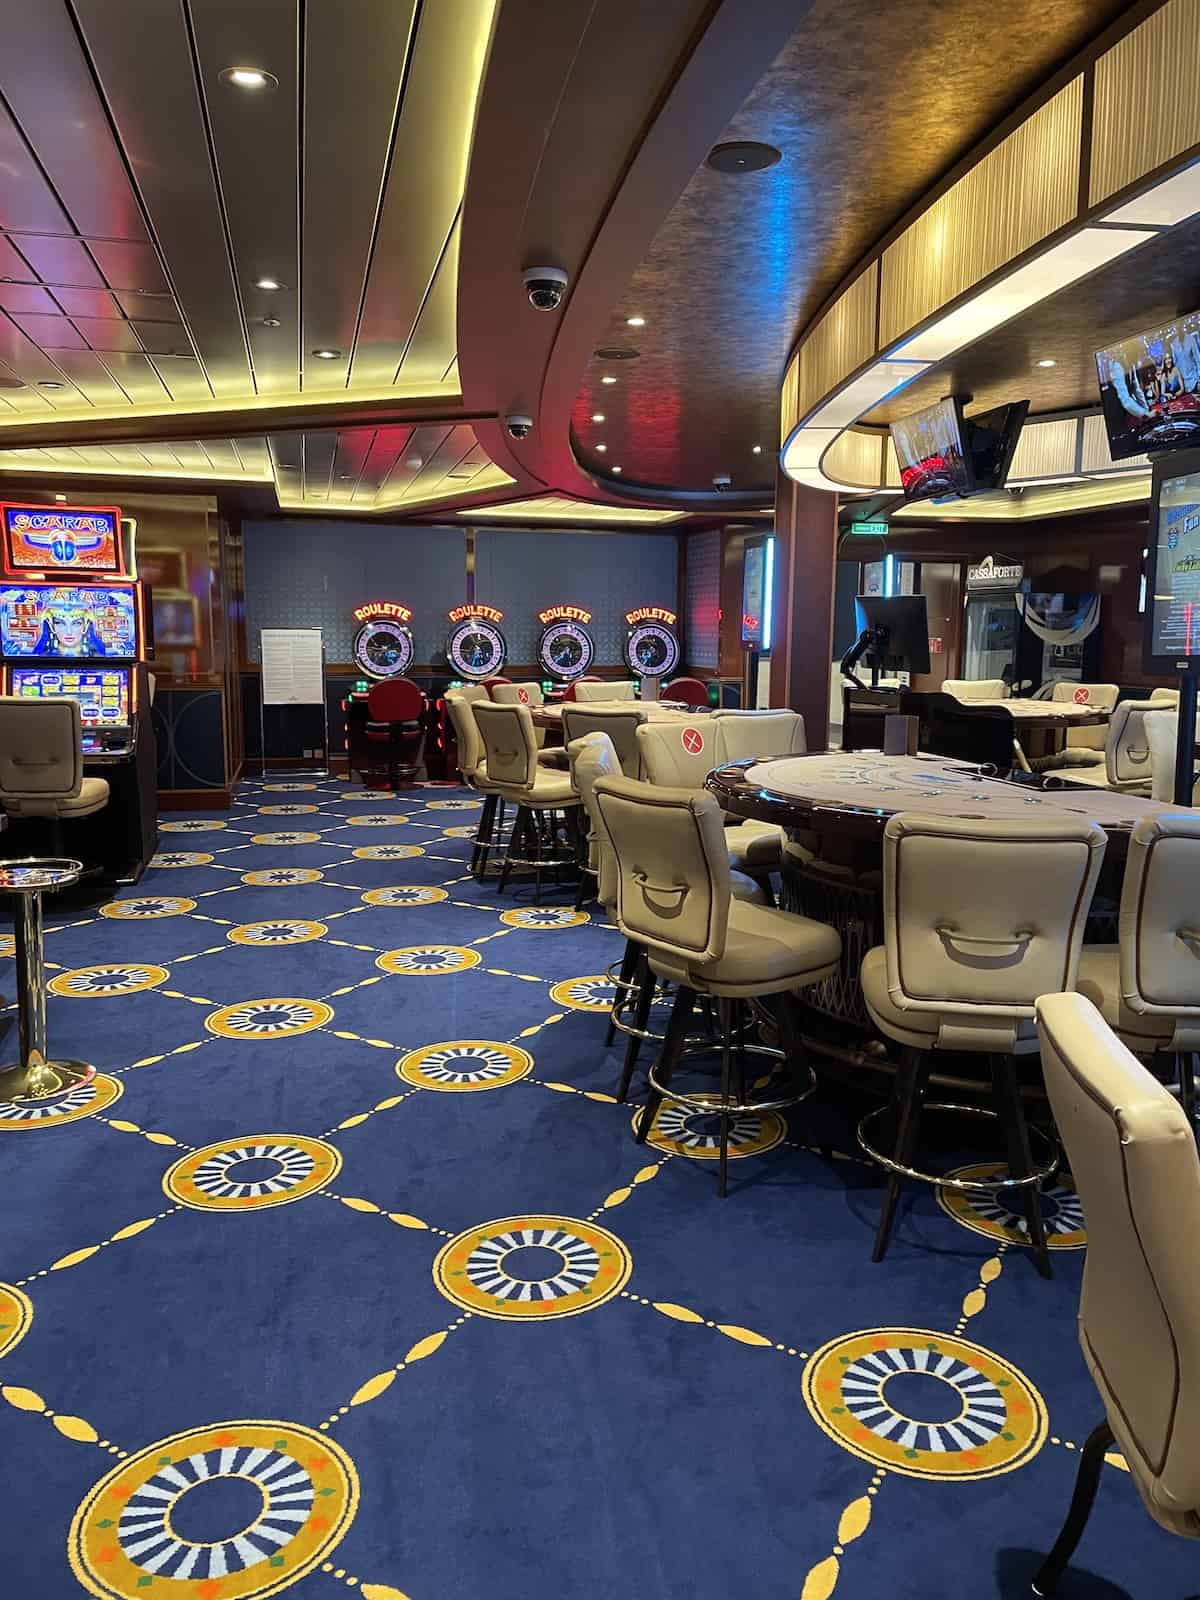 Casino on Costa Smeralda Cruise Ship.